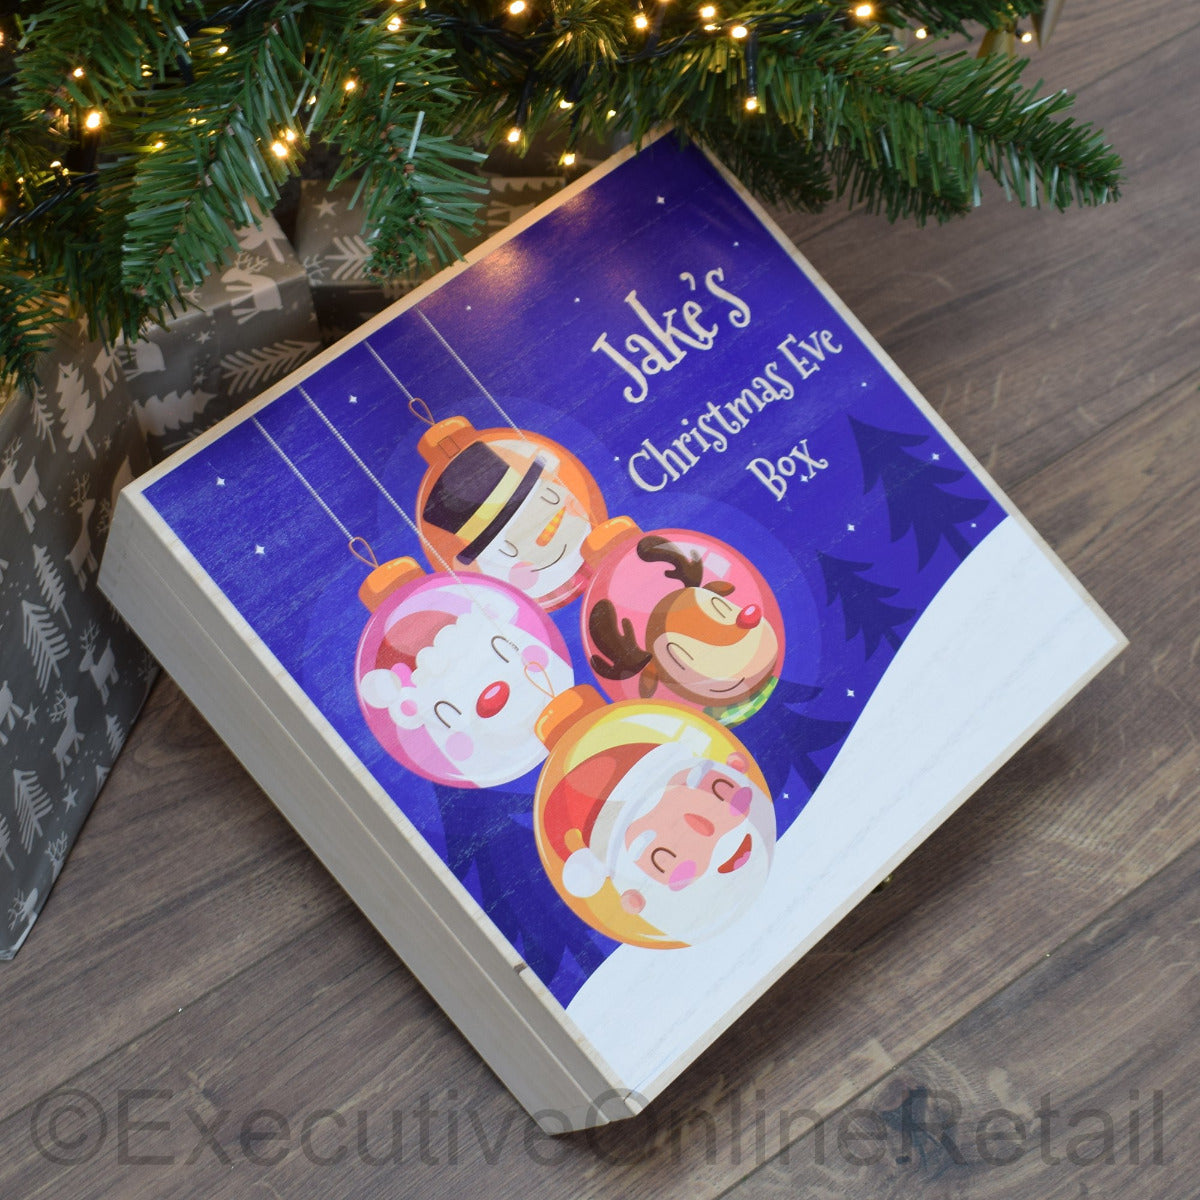 Personalised Printed Wooden Christmas Eve Box - Bauble Santa